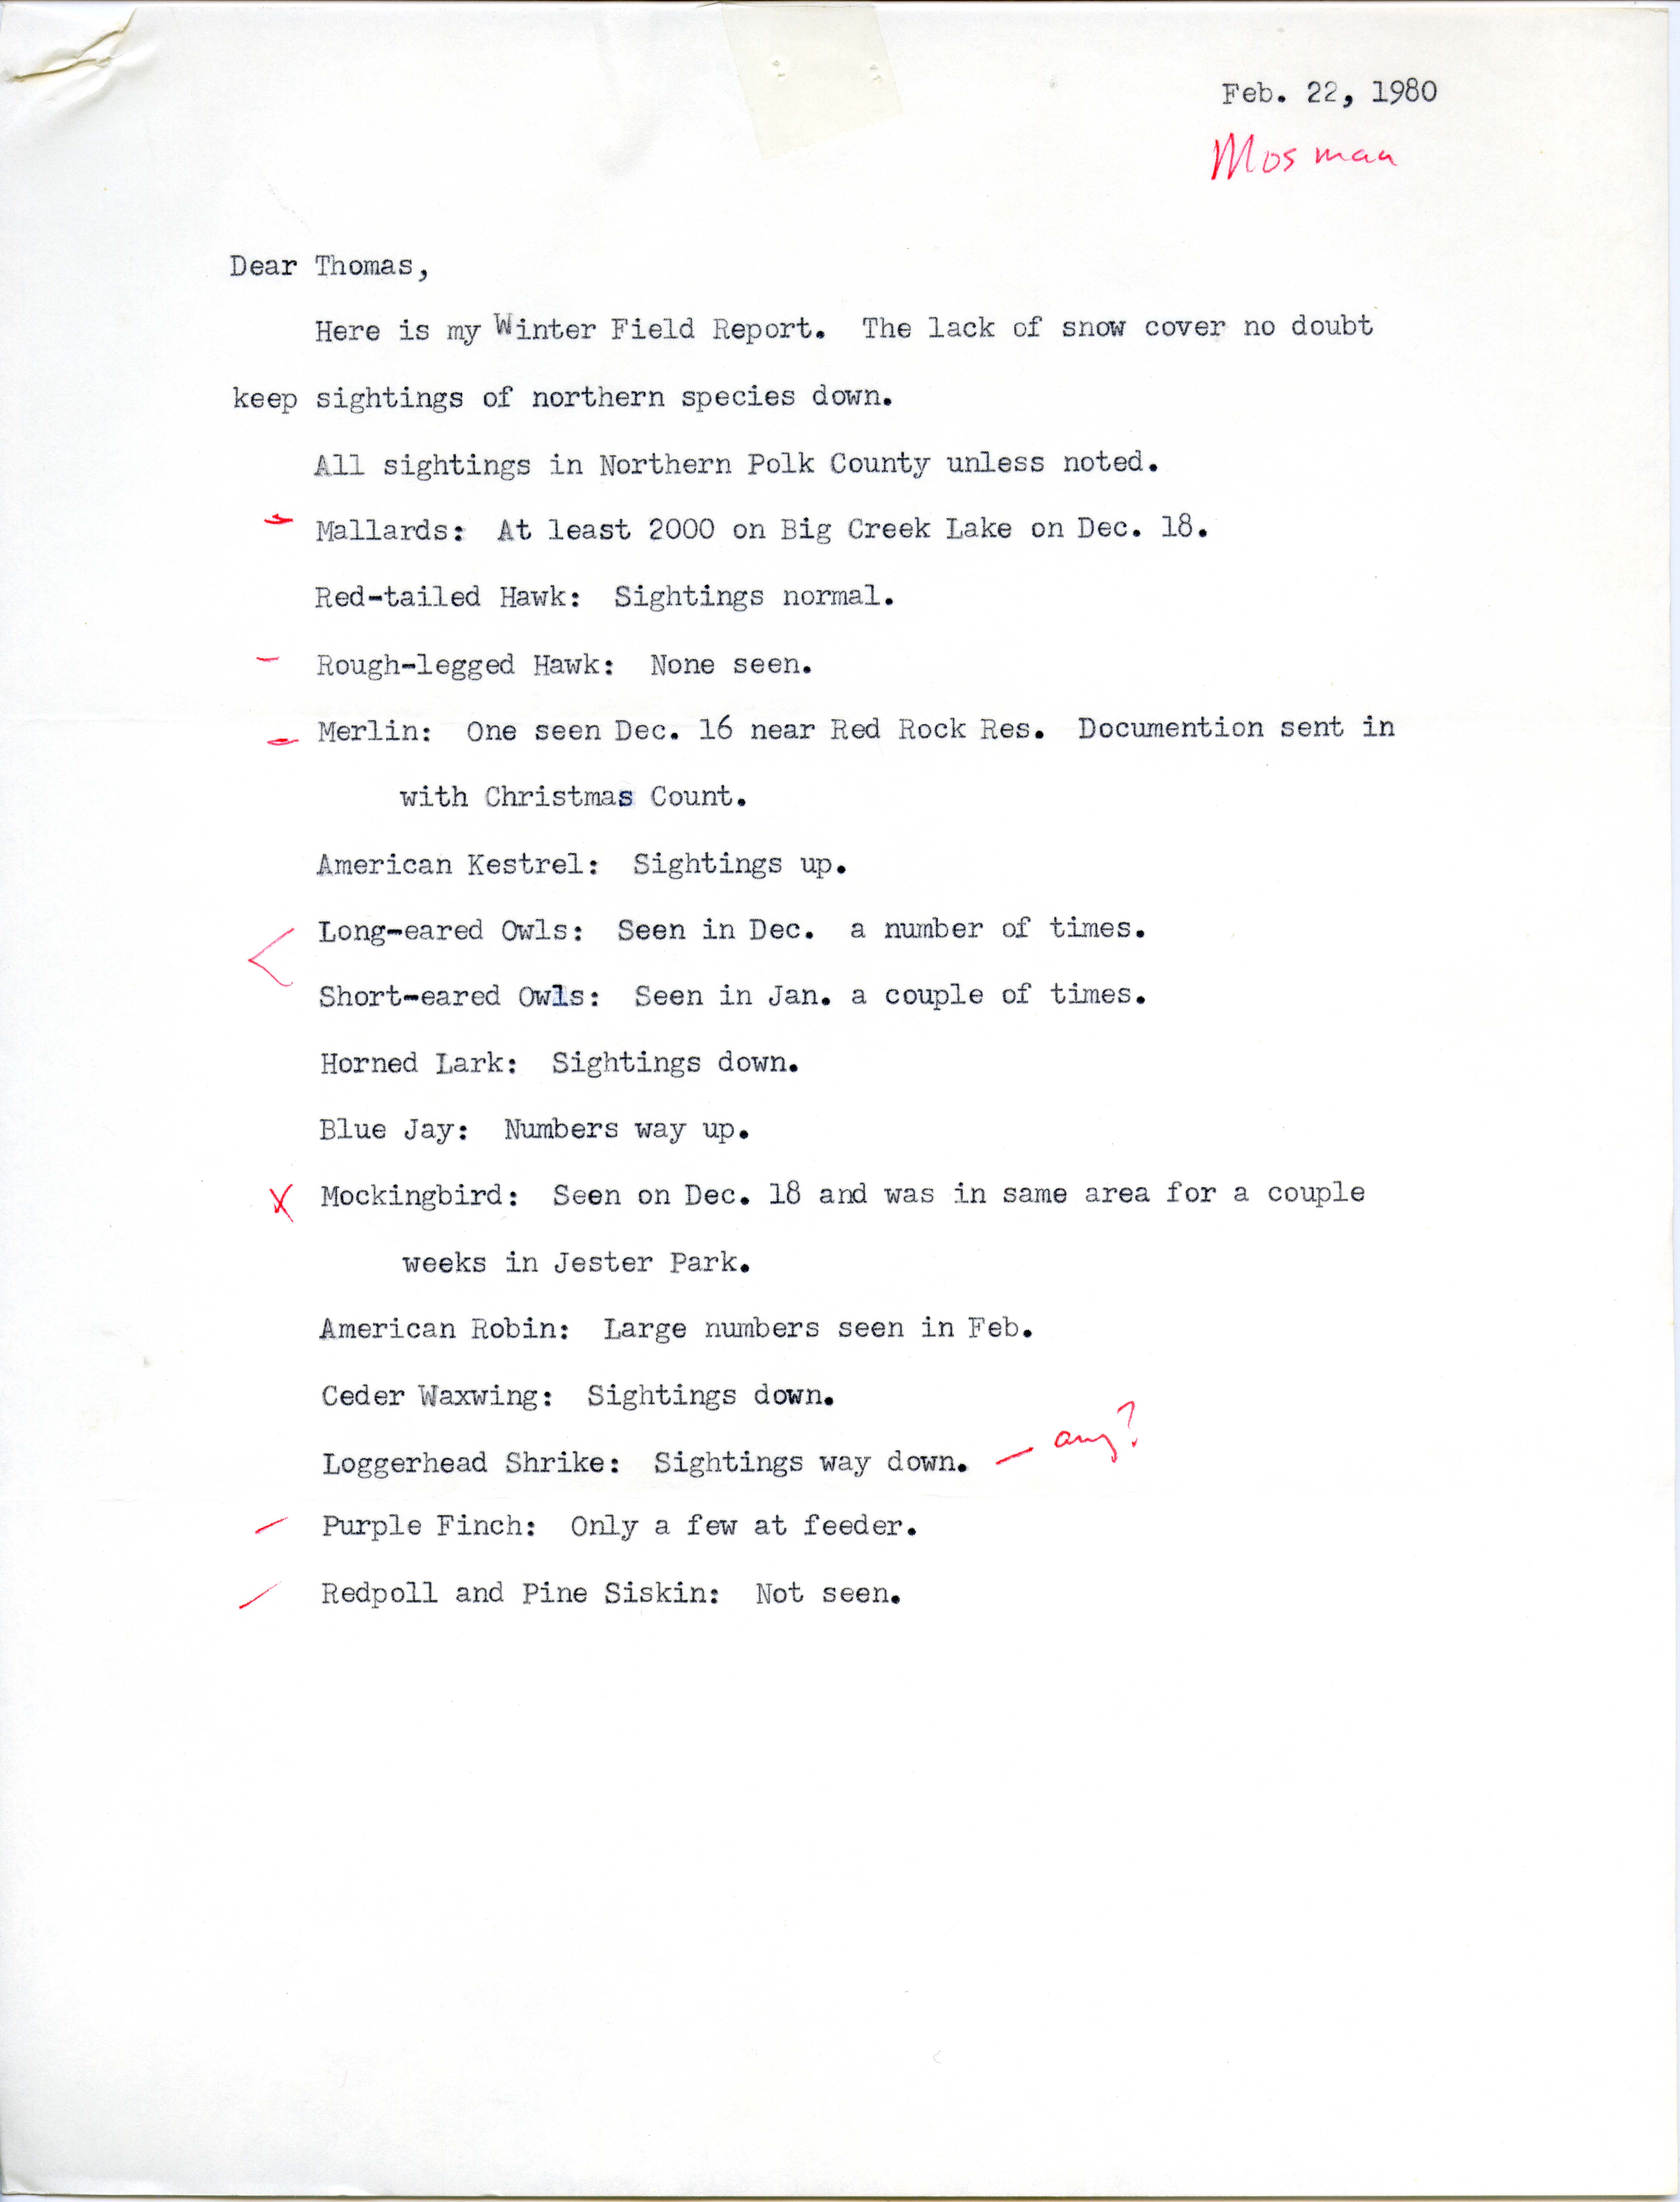 Dean Mosman letter to Thomas H. Kent regarding bird sightings, February 22, 1980